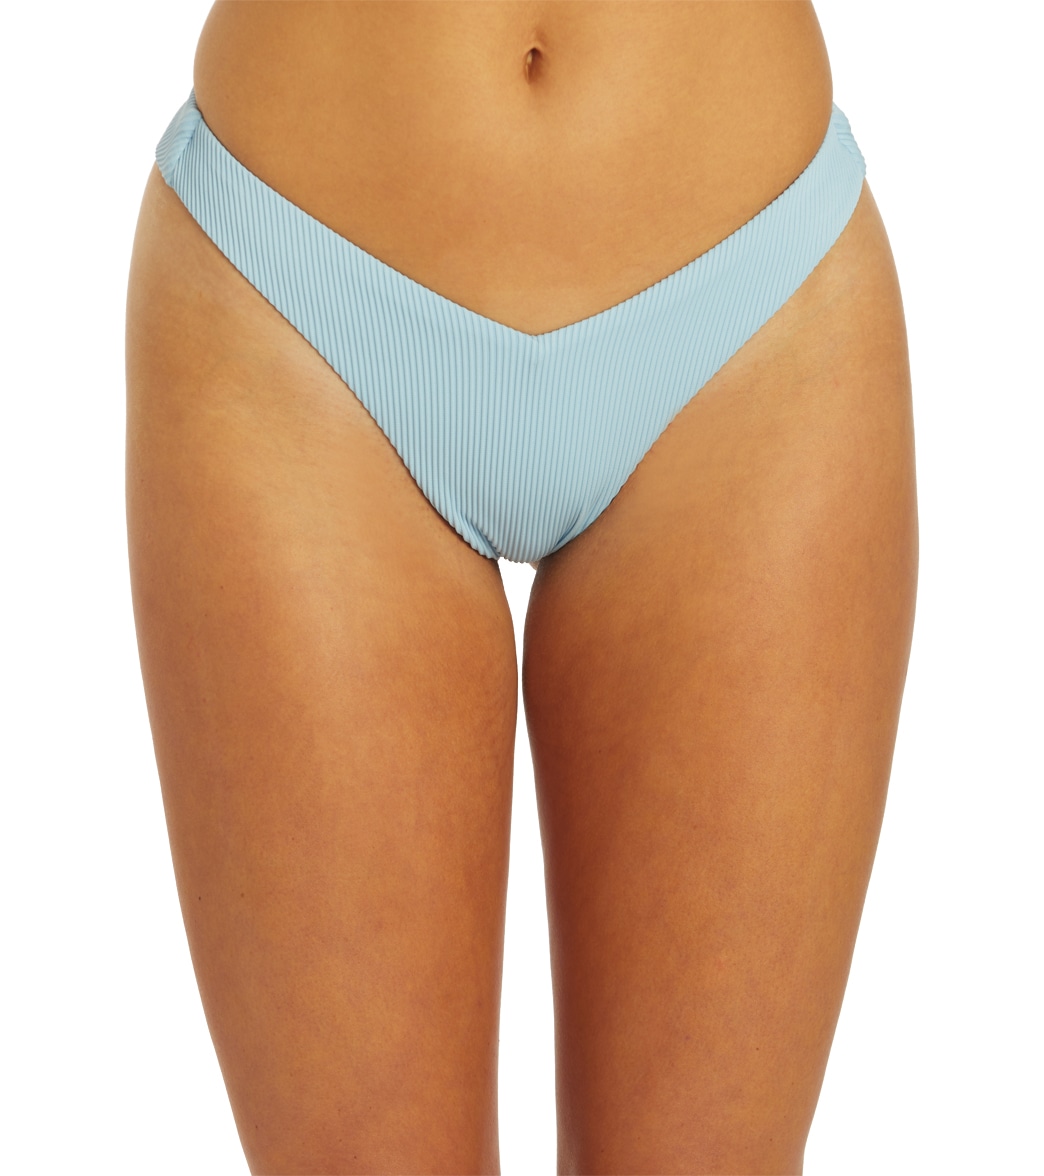 Roxy Women's Rib Love Cheeky High Leg Bikini Bottom - Powder Blue Small - Swimoutlet.com